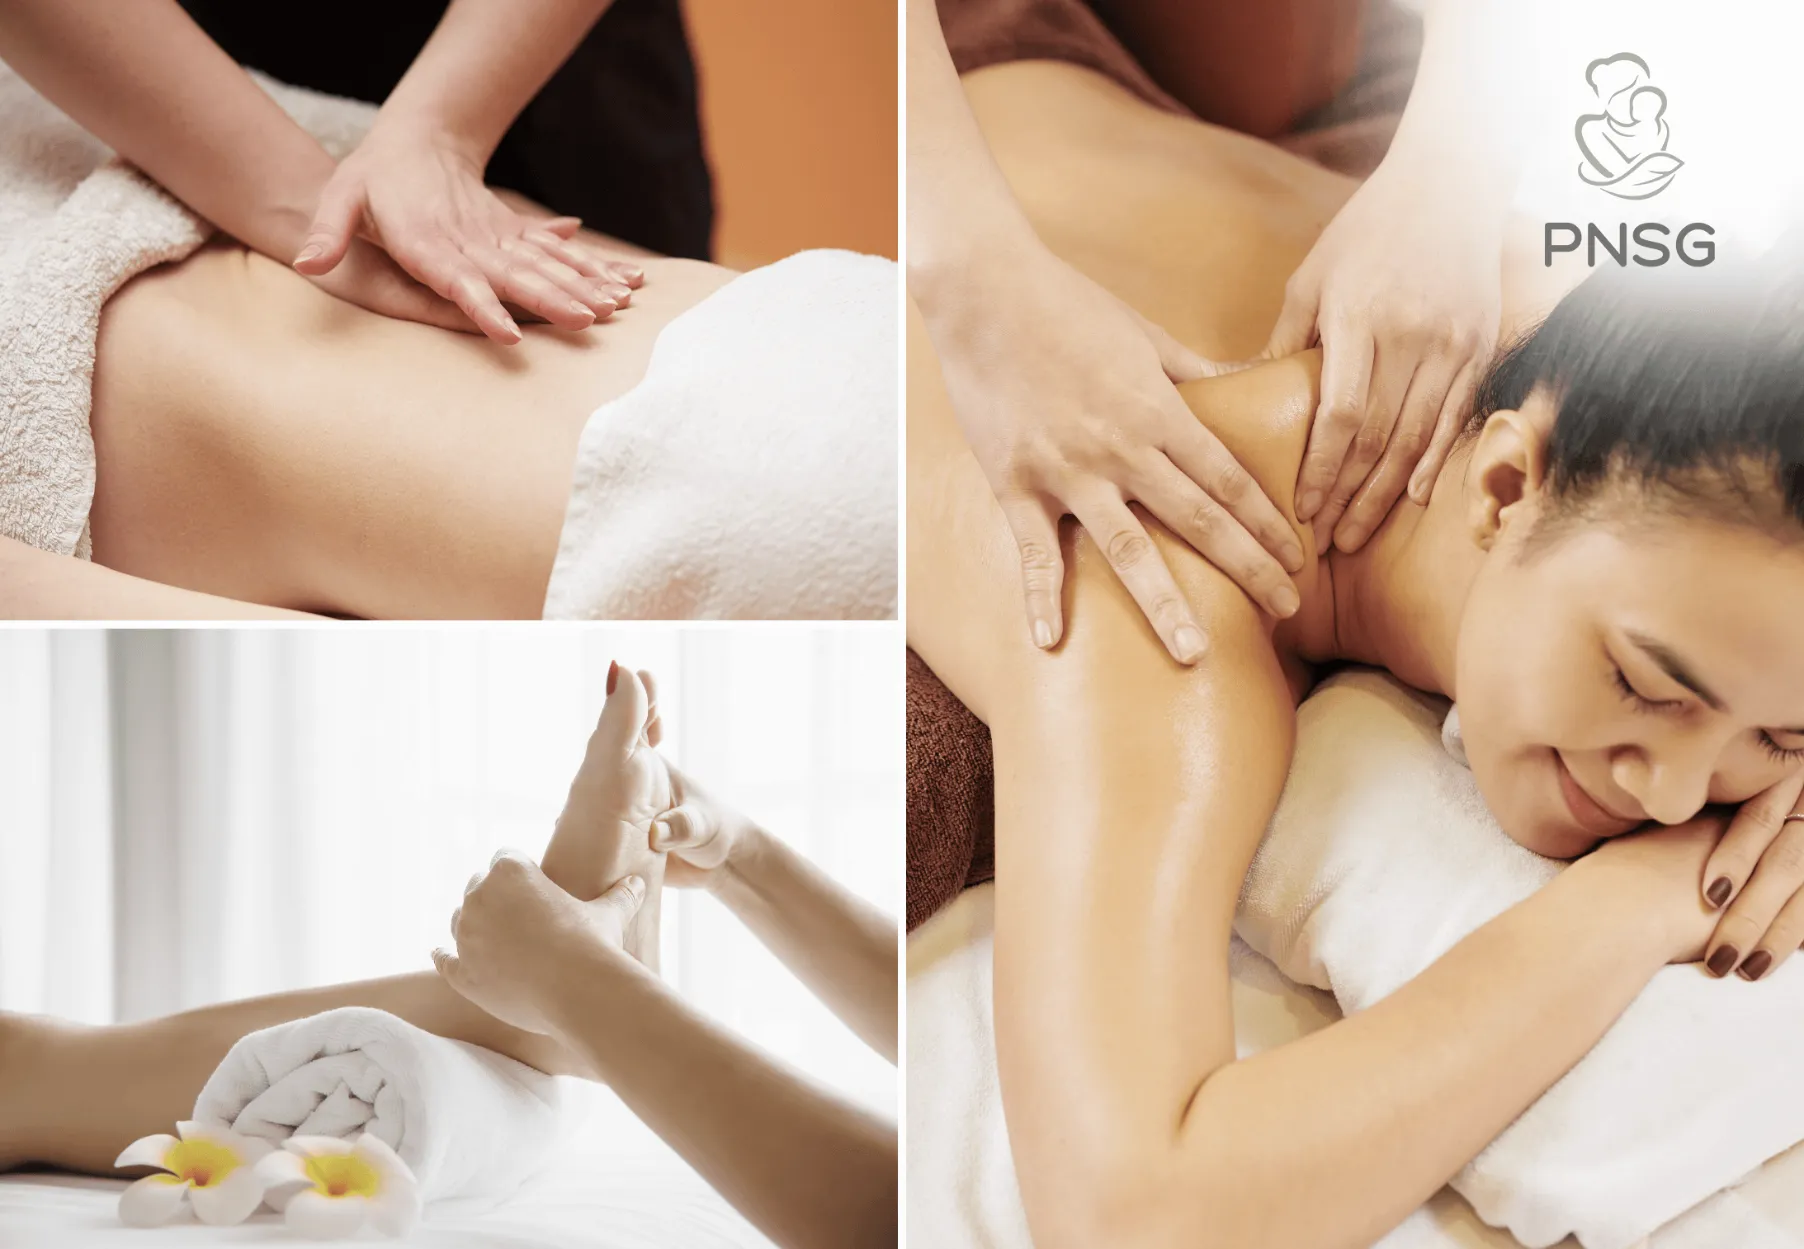 Postnatal Massage in Different Cultures